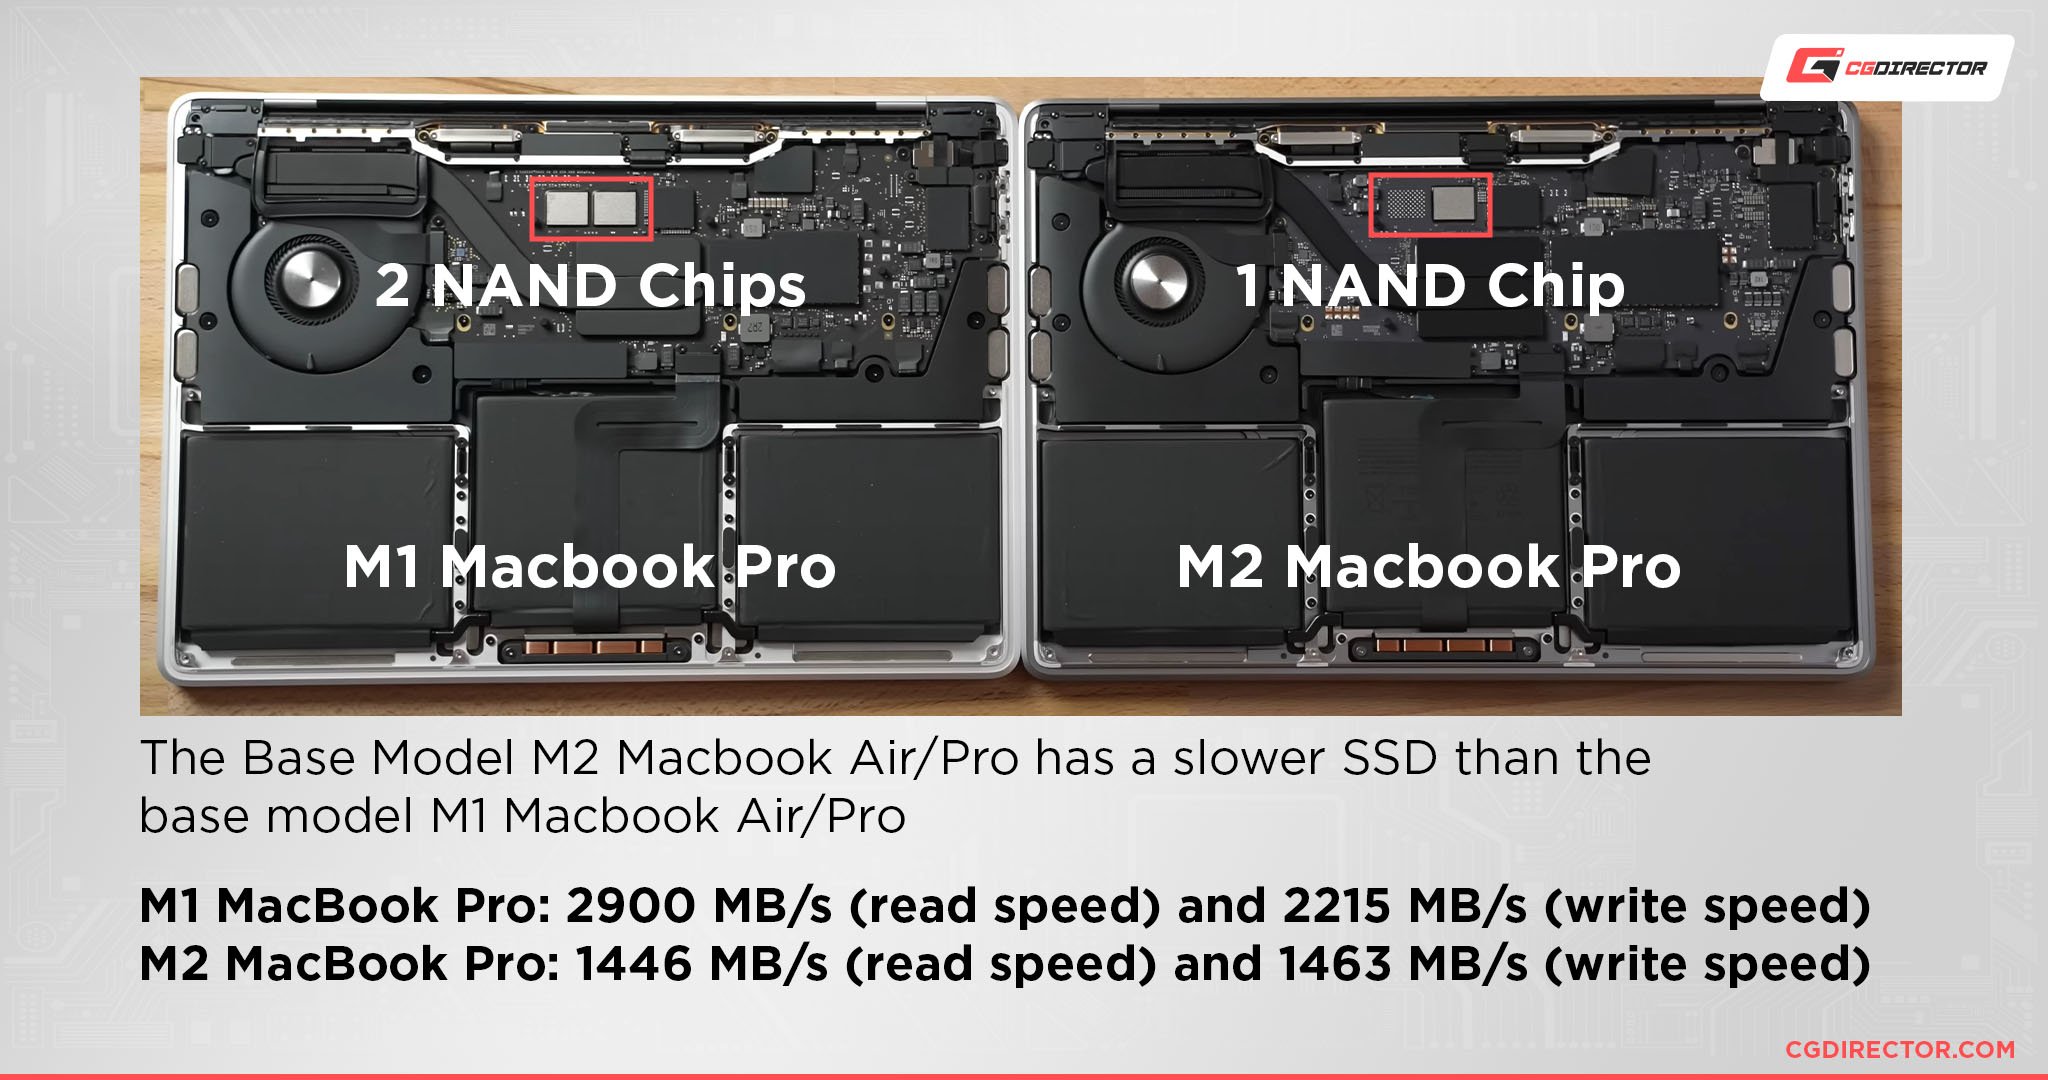 M1 vs M2 Macbook Air SSD Comparison